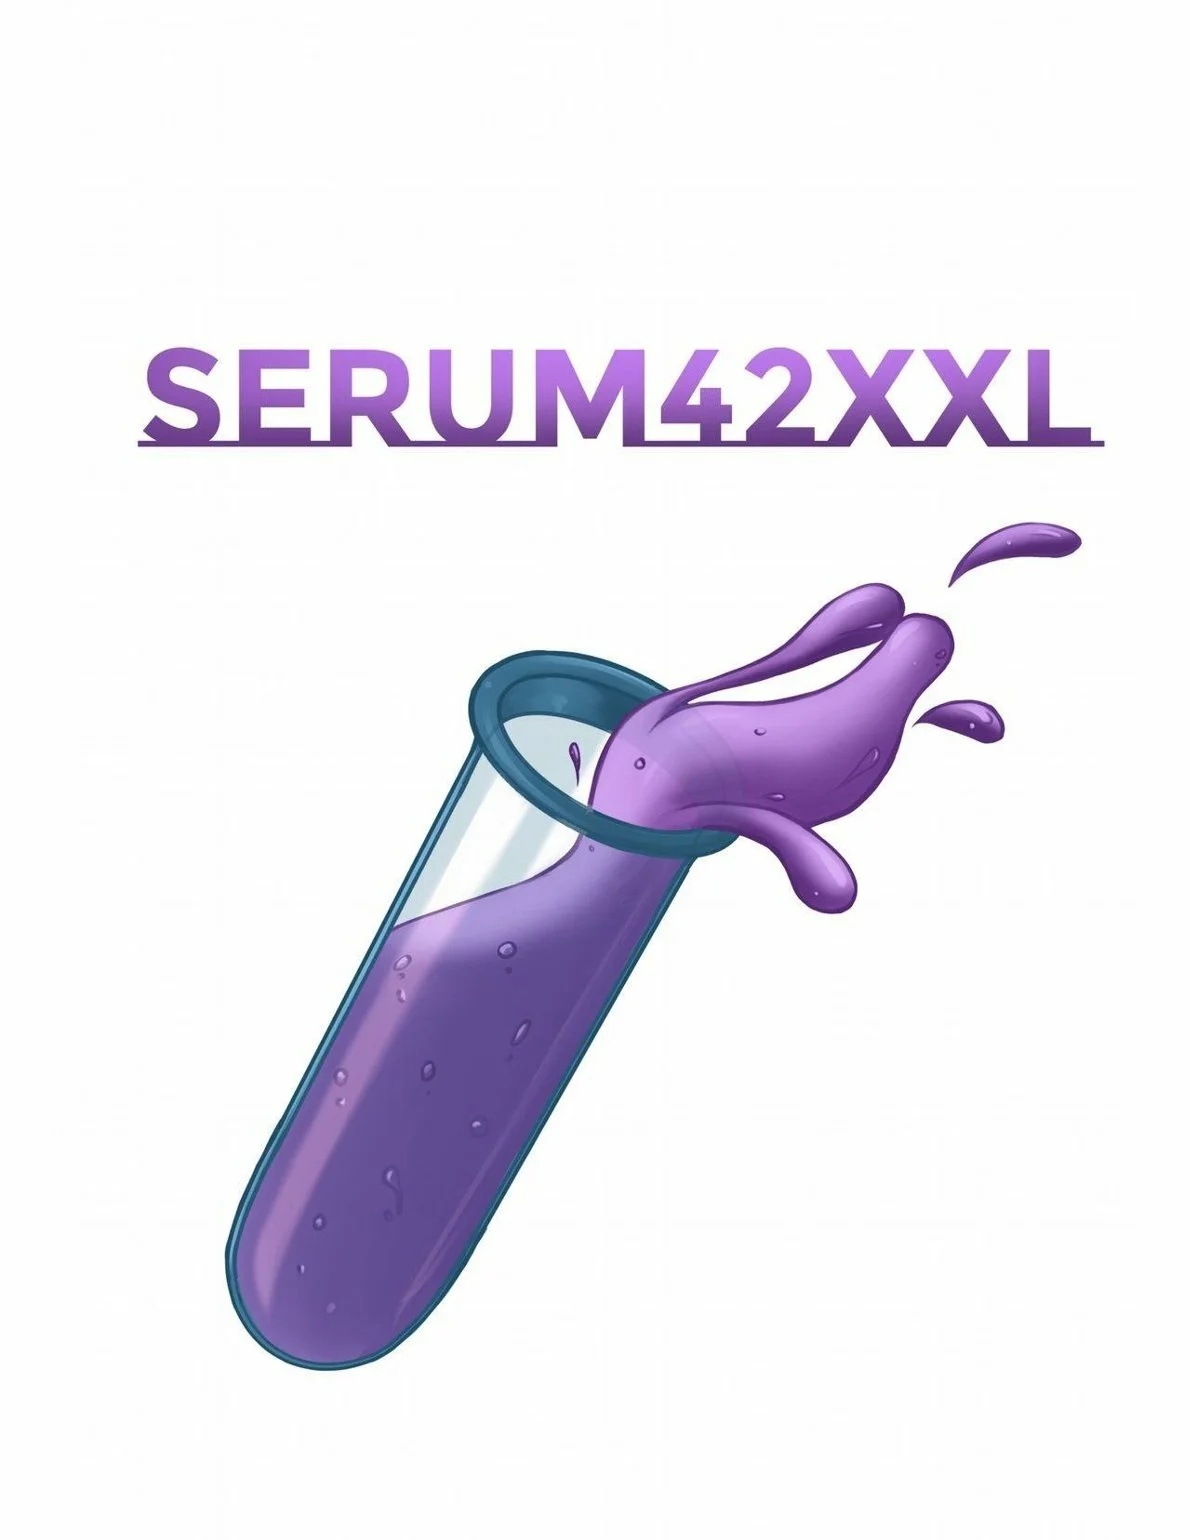 Serum42XXL (completo) - 64